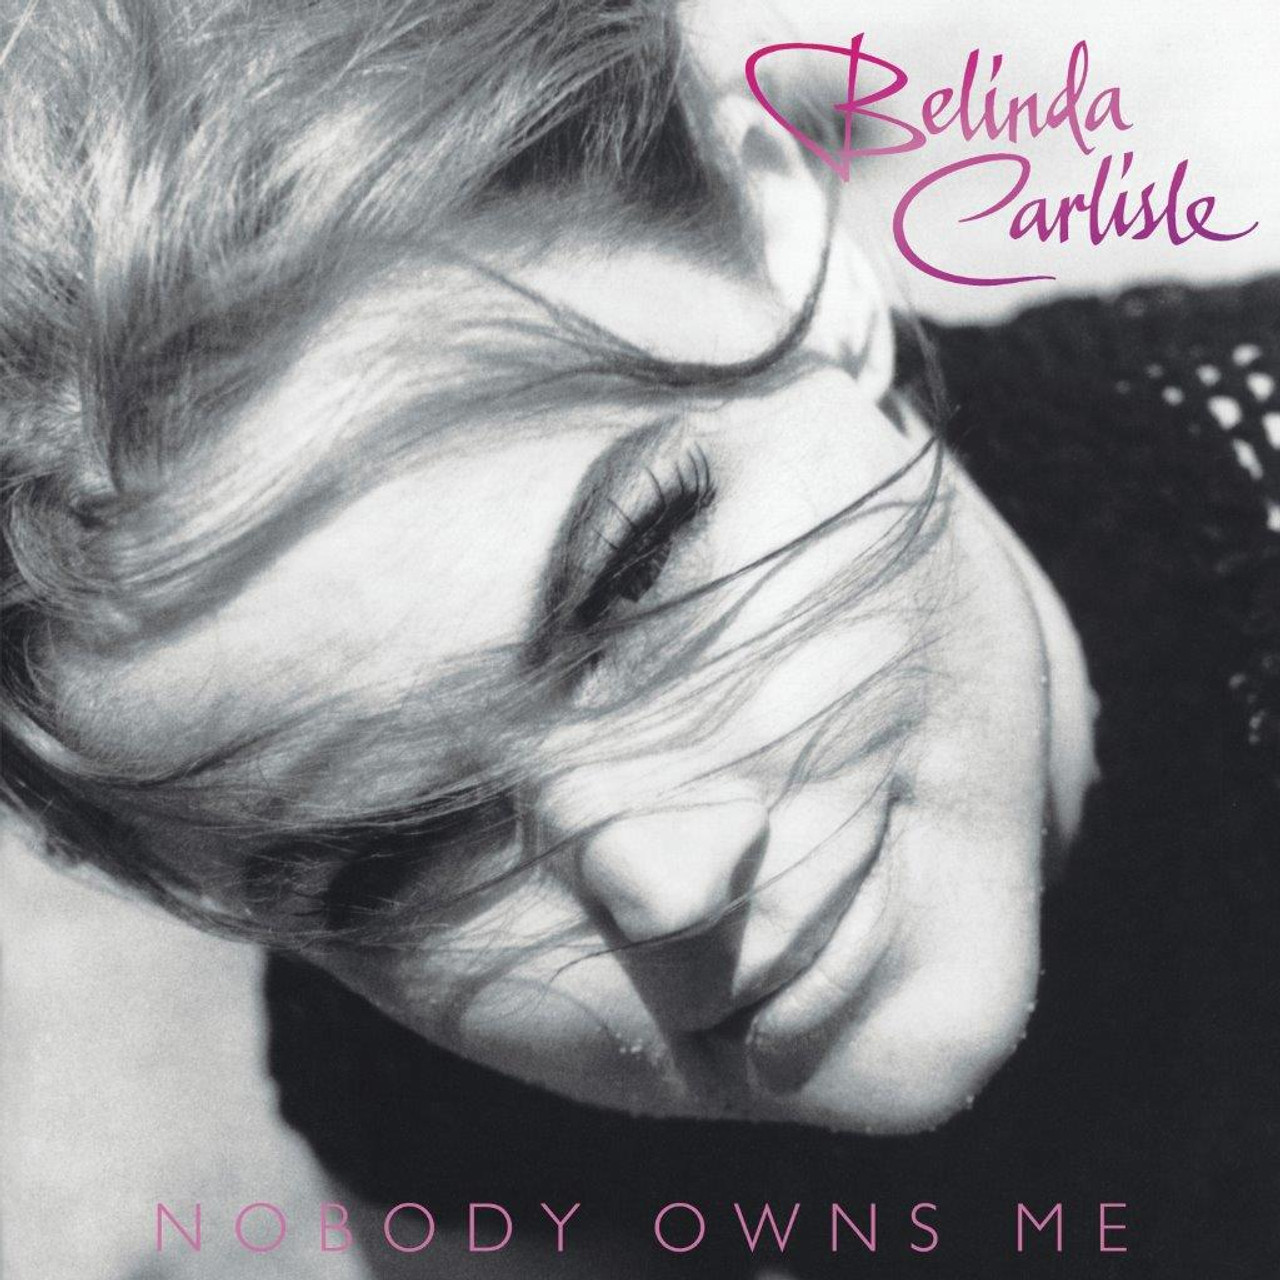 Belinda Carlisle - Nobody owns Me (White Vinyl)